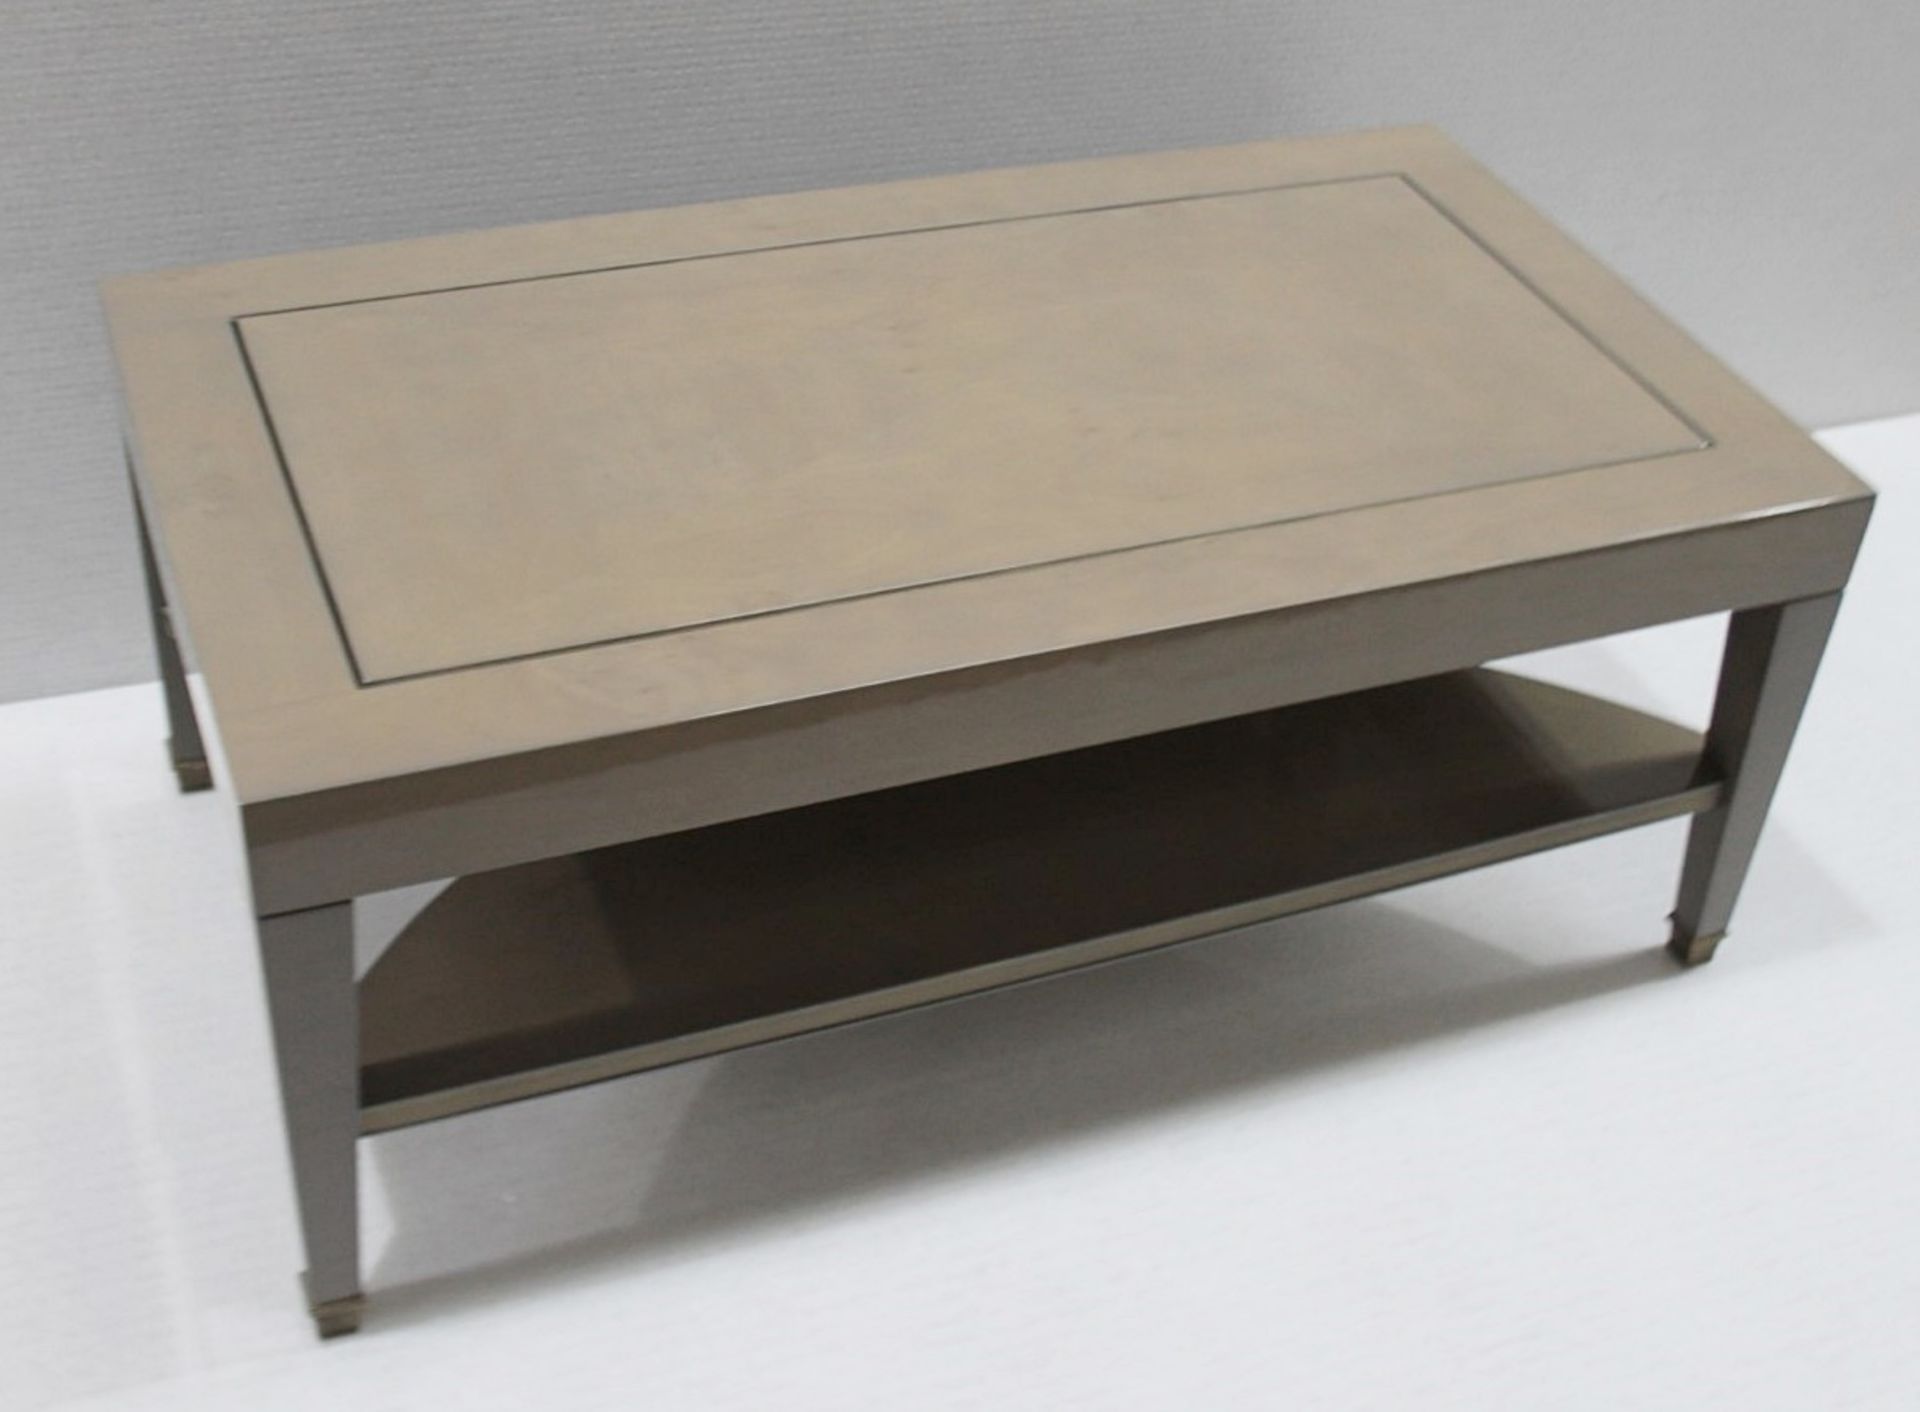 1 x JUSTIN VAN BREDA 'Legacy Alexander' Designer Lacquered Coffee Table With Undershelf - RRP £5,000 - Image 2 of 9